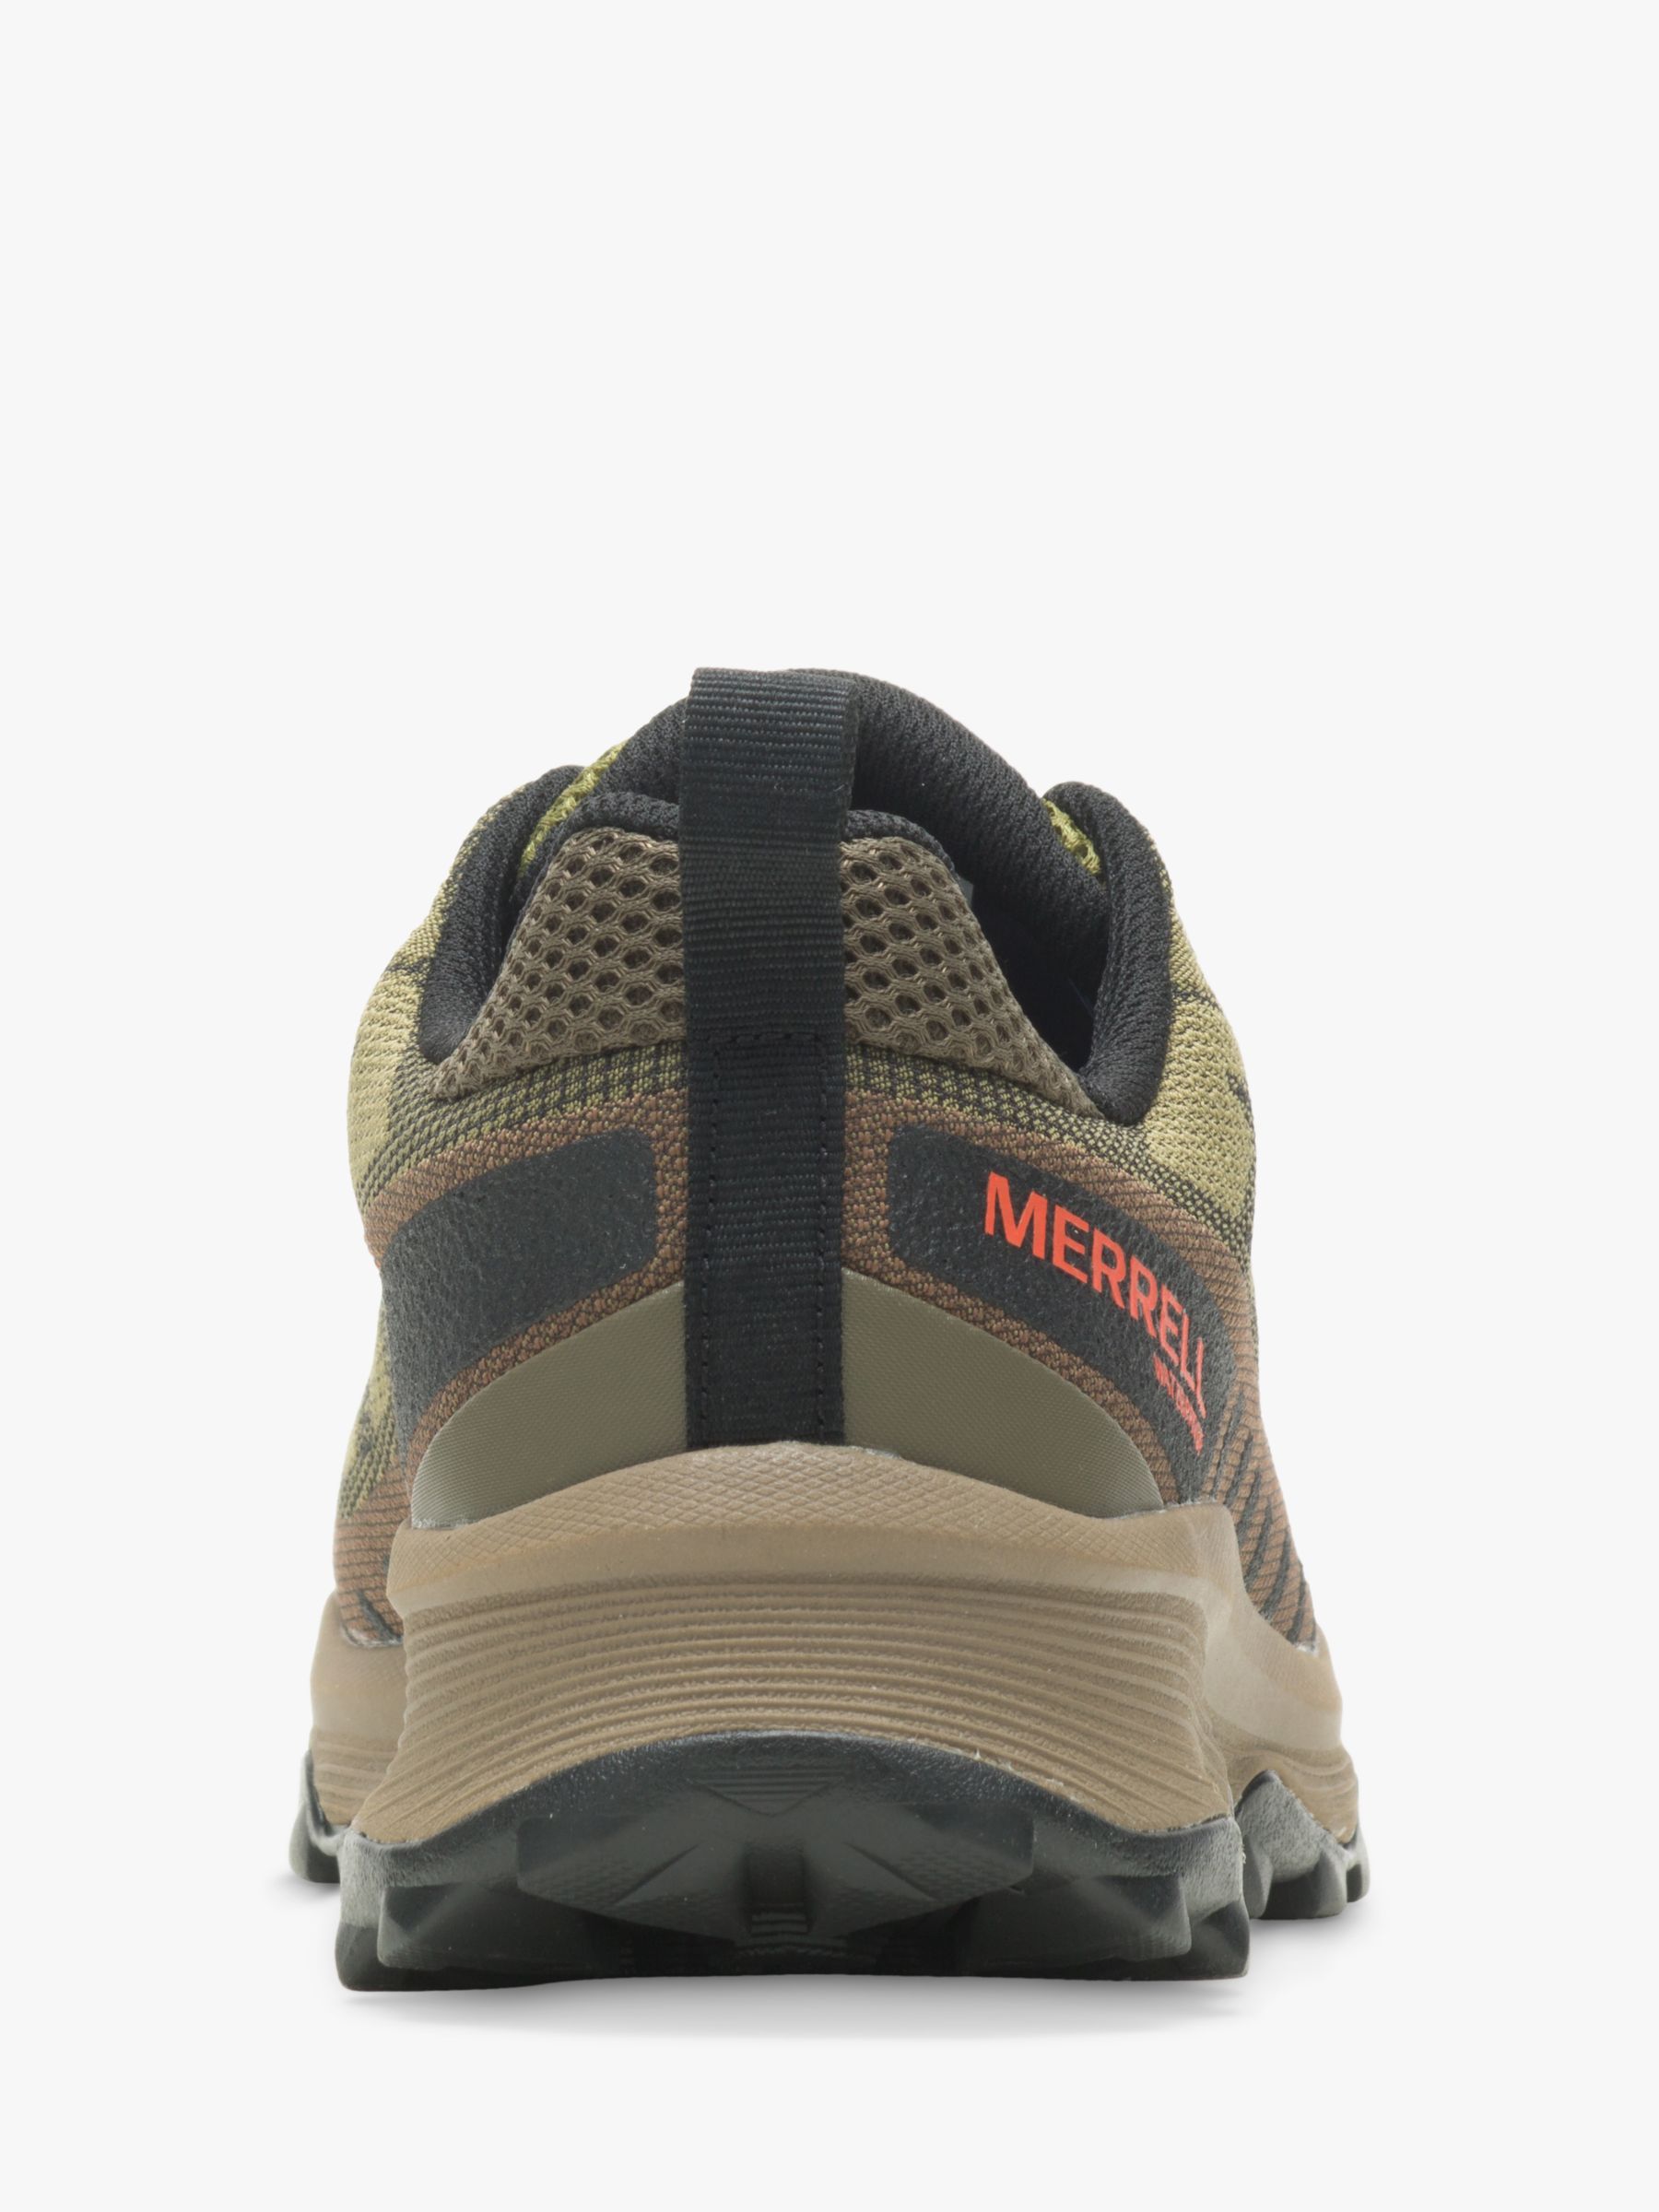 Merrell Speed Eco Waterproof Hiking Shoes & Partners